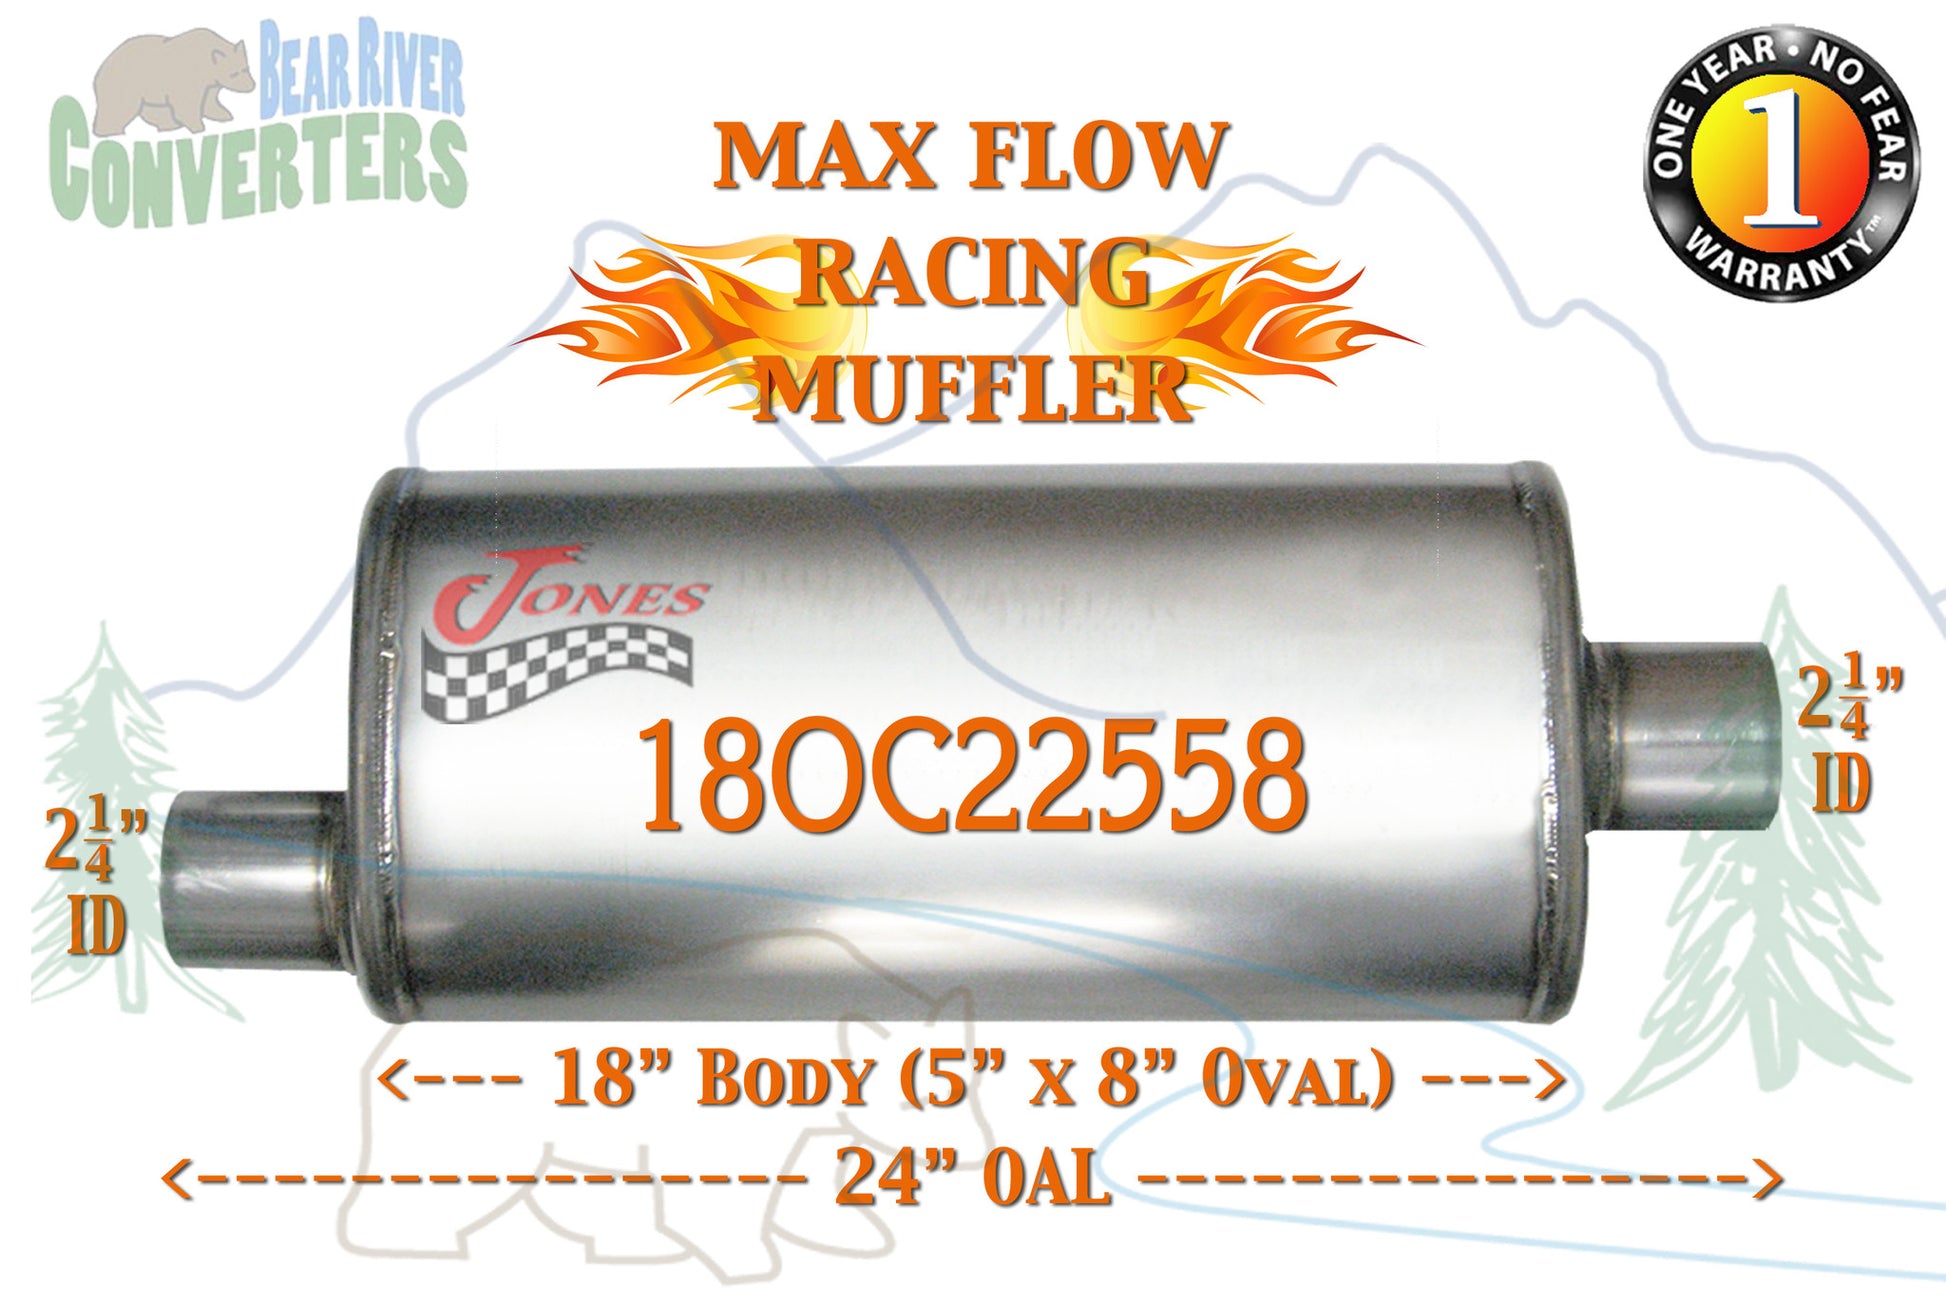 18OC22558 Jones MF2255 Max Flow Racing Muffler 18” Oval Body 2 1/4” 2.25” Pipe Offset/Center 24” OAL - Bear River Converters